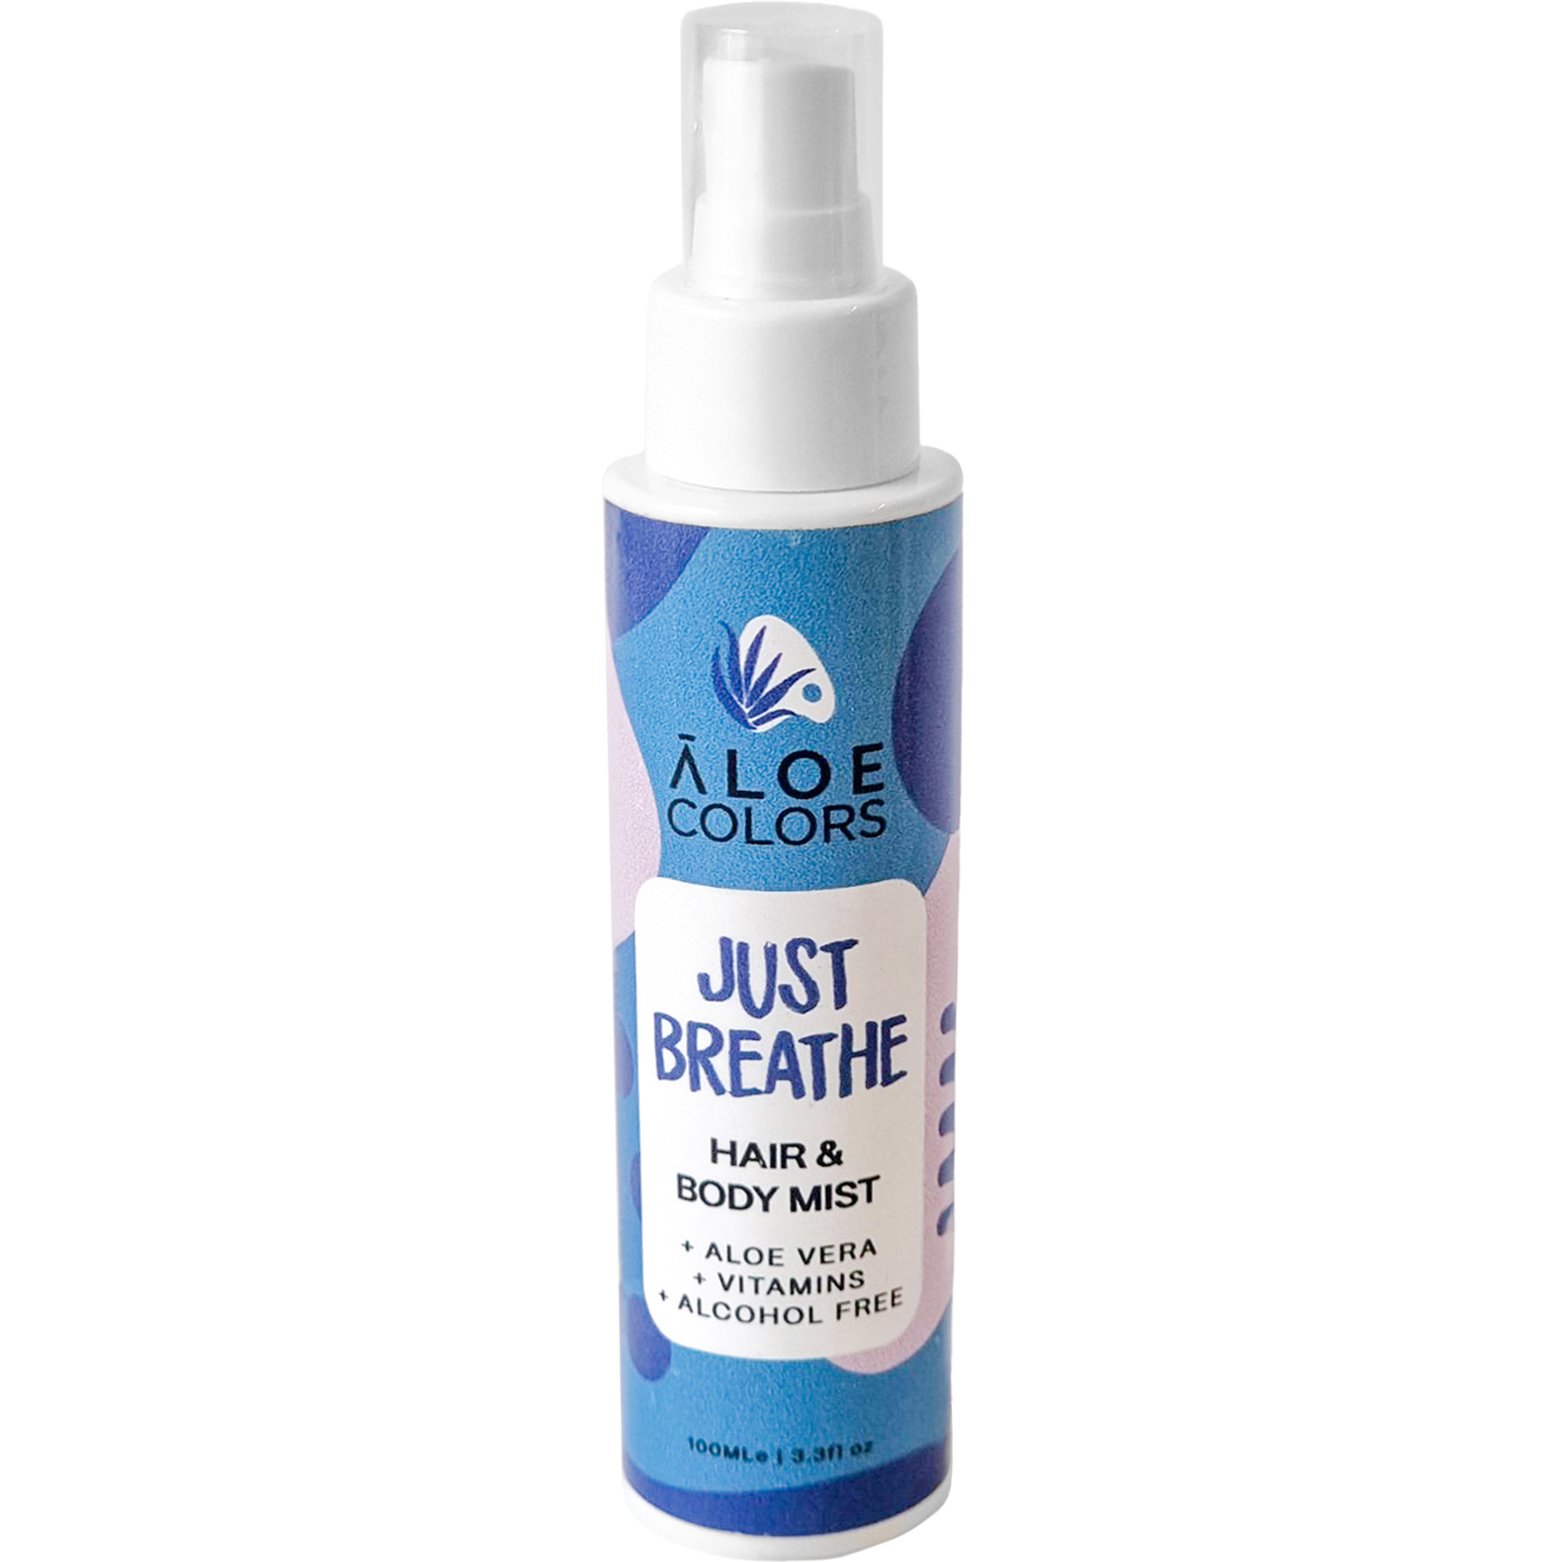 Aloe Colors Hair & Body Mist Just Breathe Ενυδατικό Spray για Σώμα – Μαλλιά με Σαγηνευτικό Άρωμα 100ml